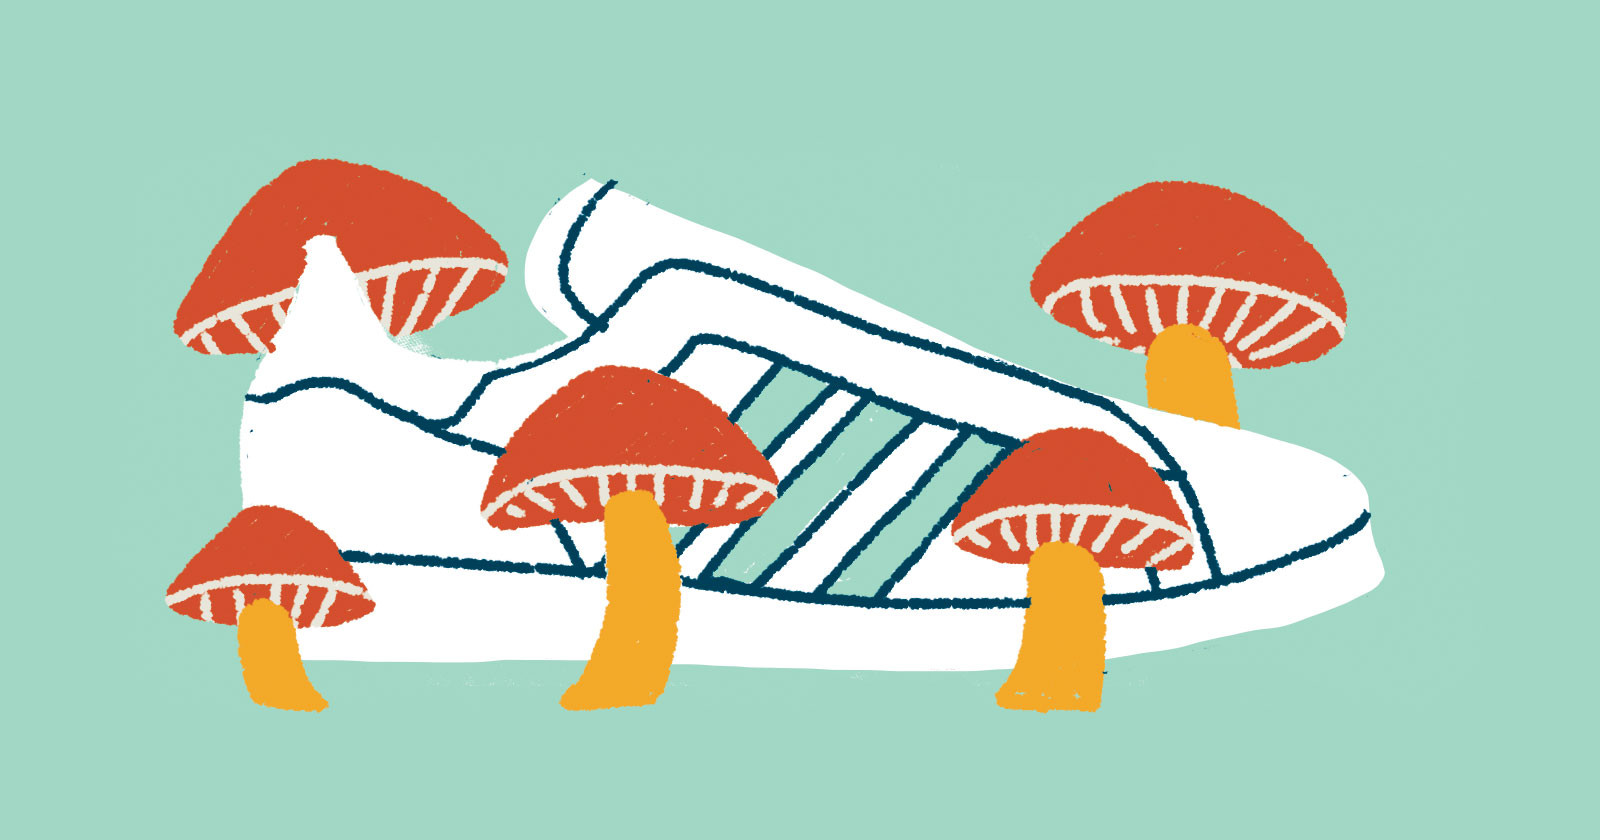 Illustrated Adidas Shoe Surrounded by Mushrooms